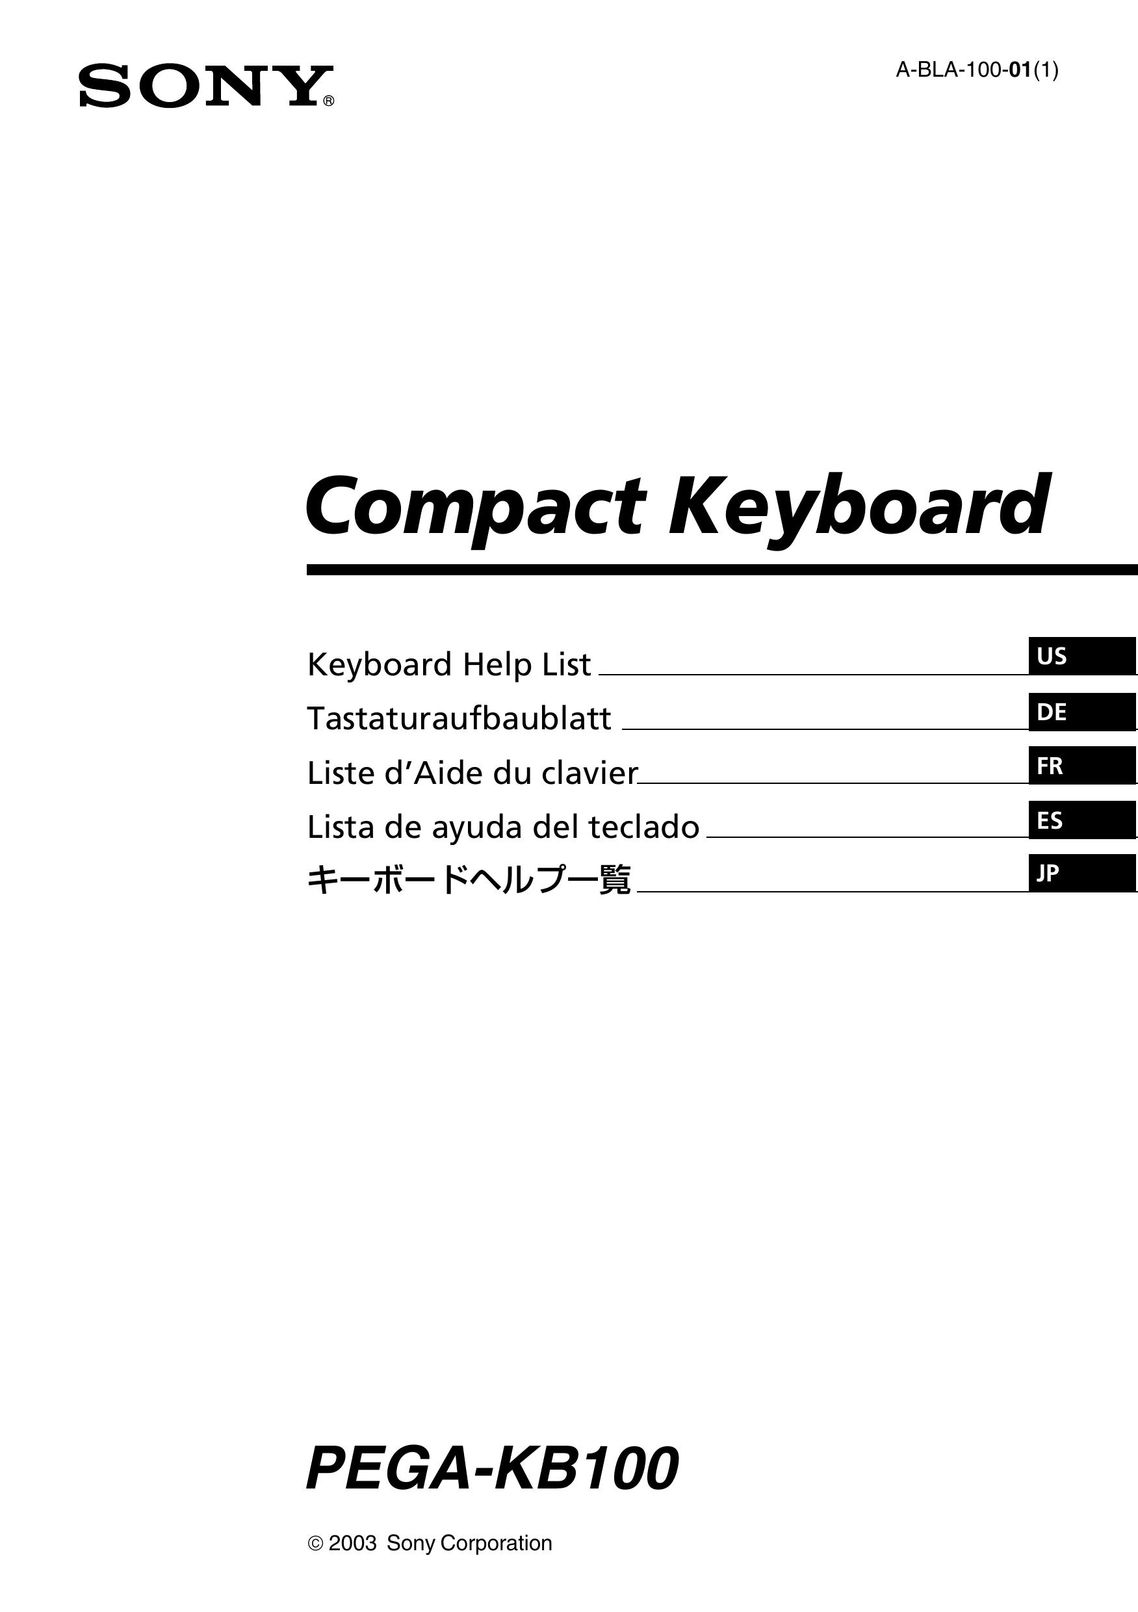 Sony PEGA-KB100 Mouse User Manual